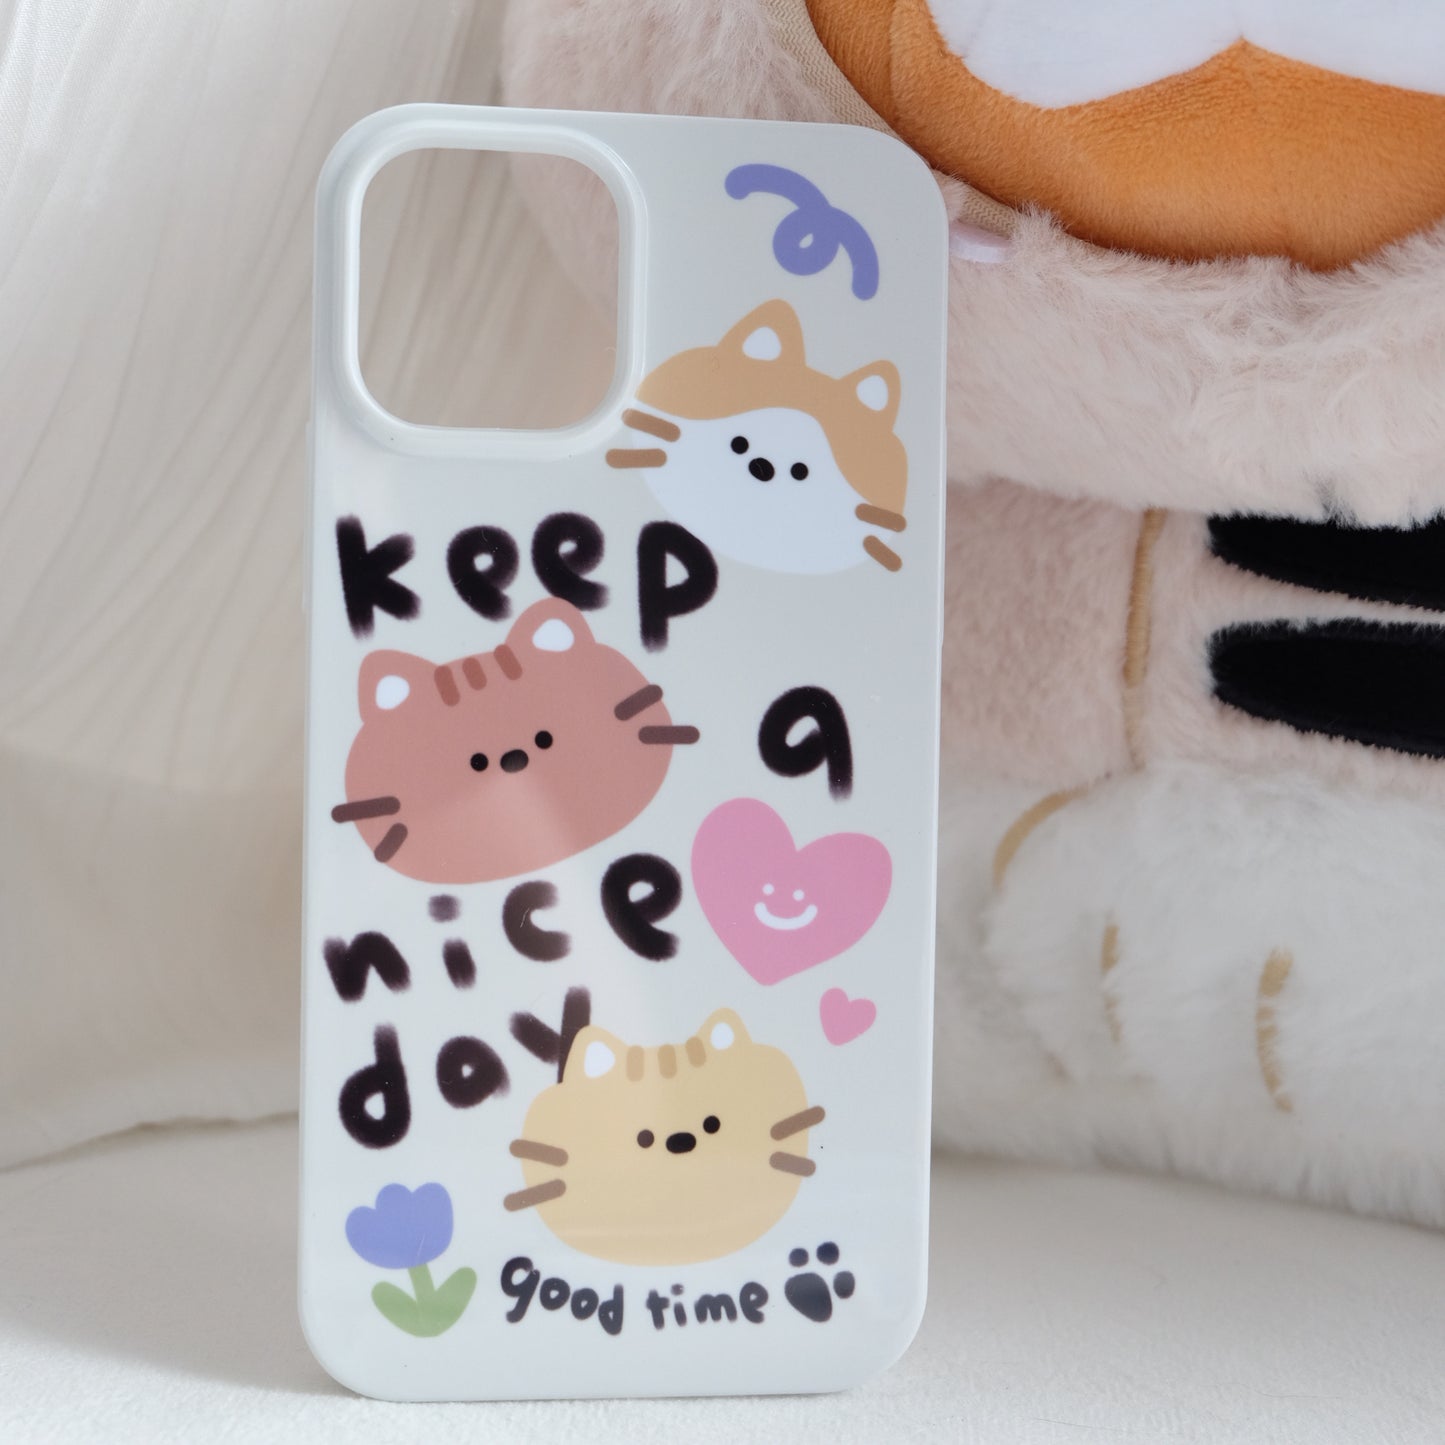 Keep a nice day cute kittens phone case